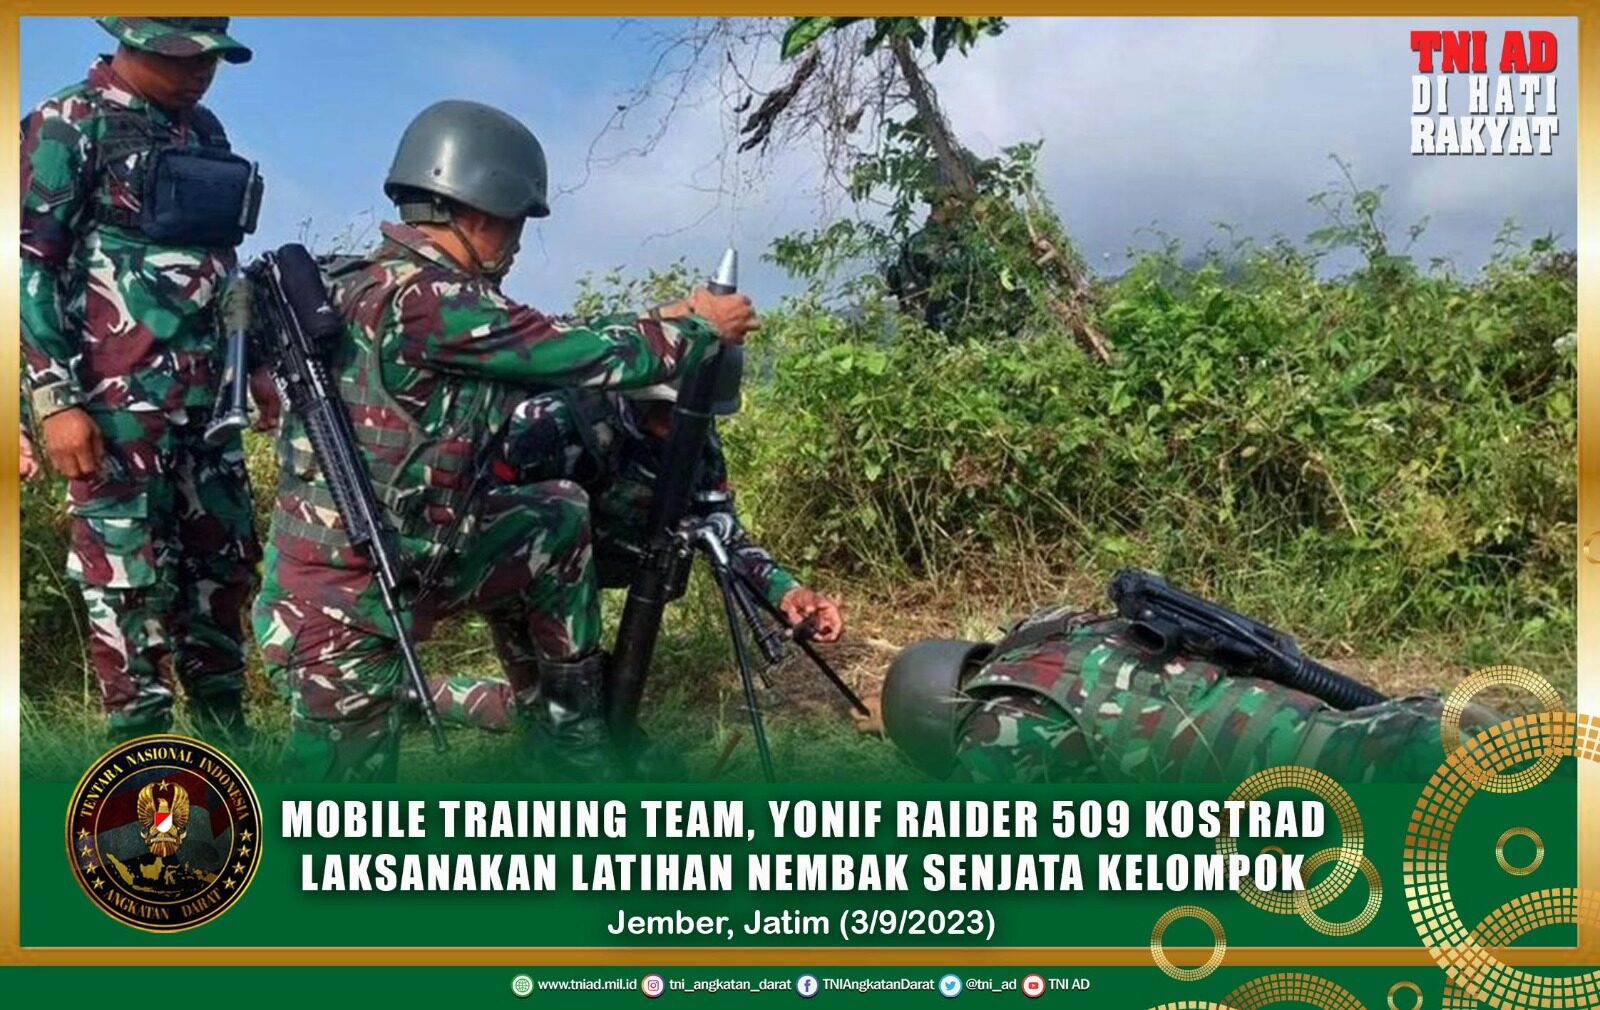 Mobile Training Team, Yonif Raider 509 Kostrad Laksanakan Latihan Nembak Senjata Kelompok